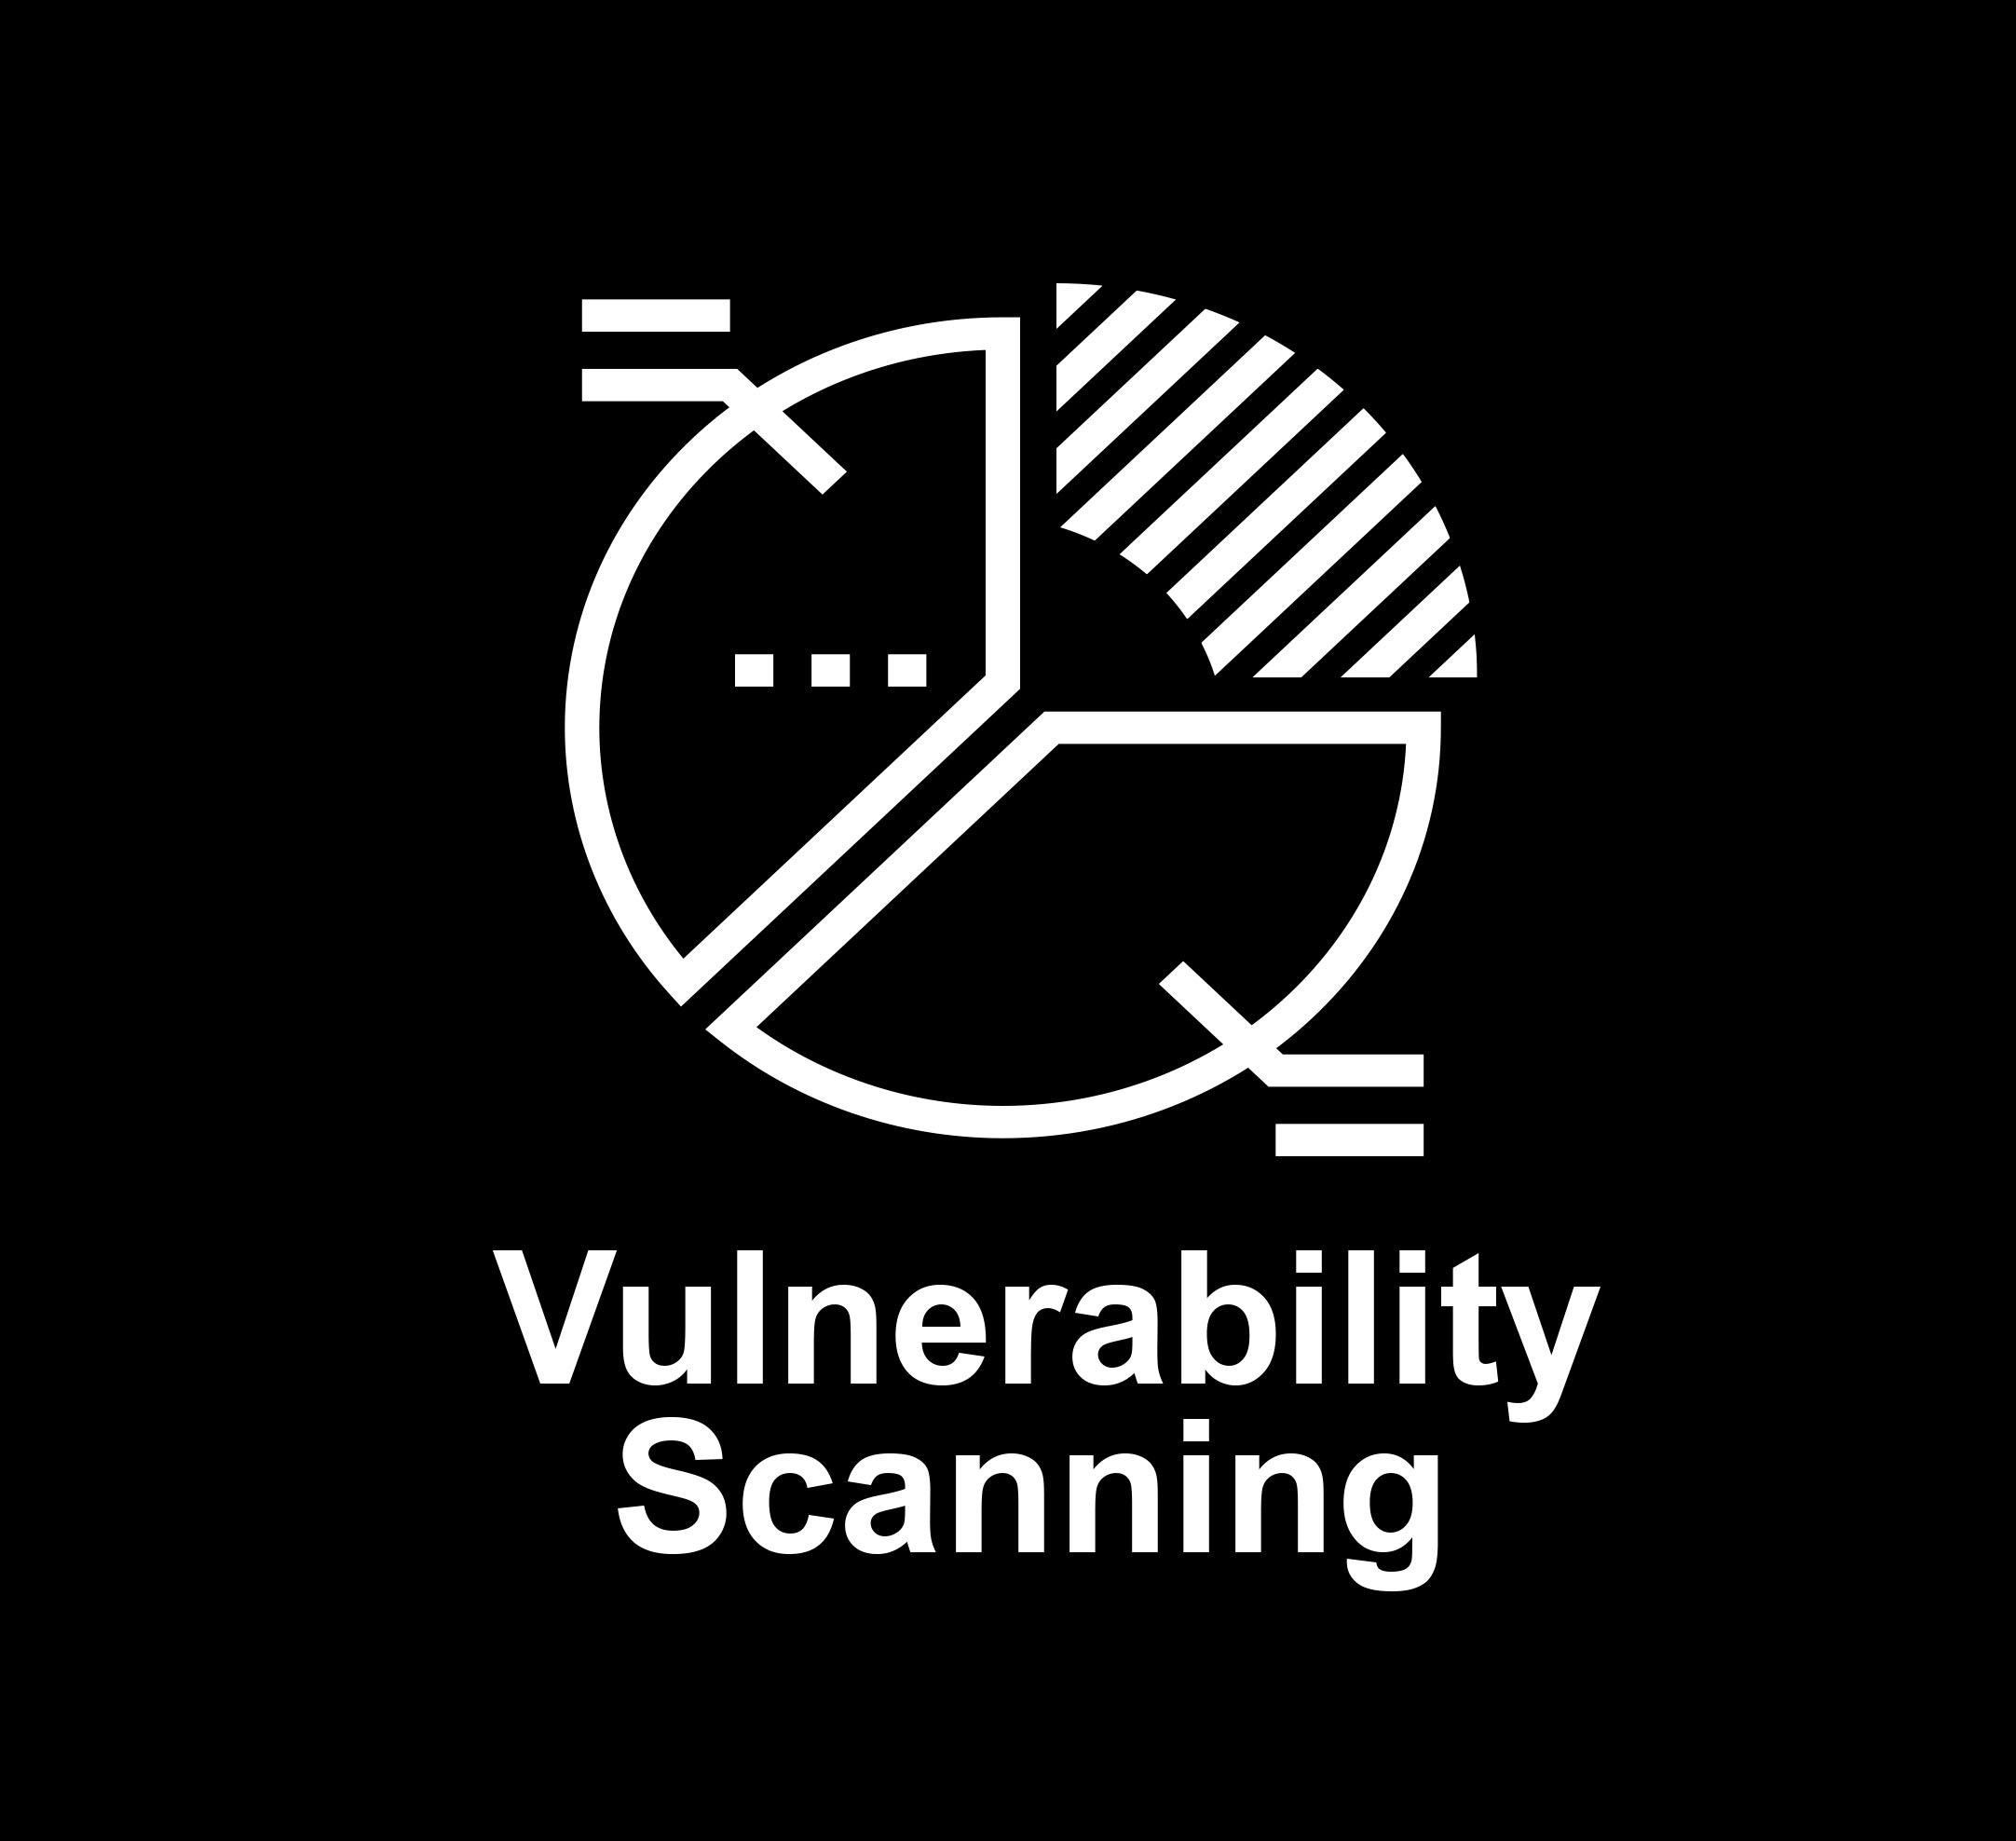 Vulnerability scanning